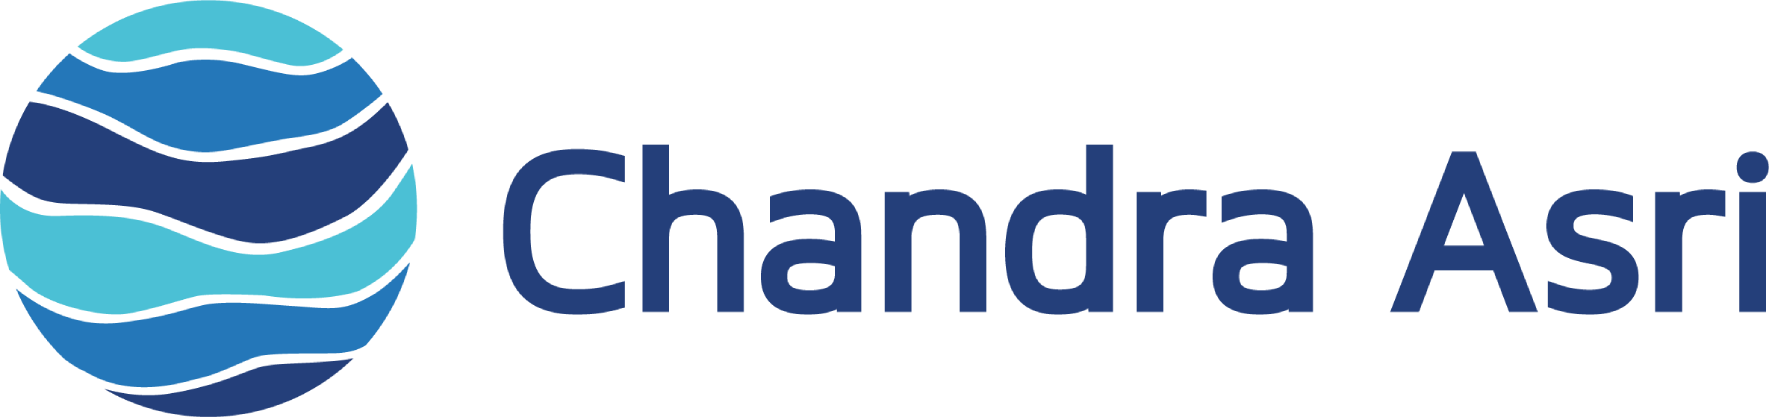 Chandra Asri Petrochemical logo large (transparent PNG)